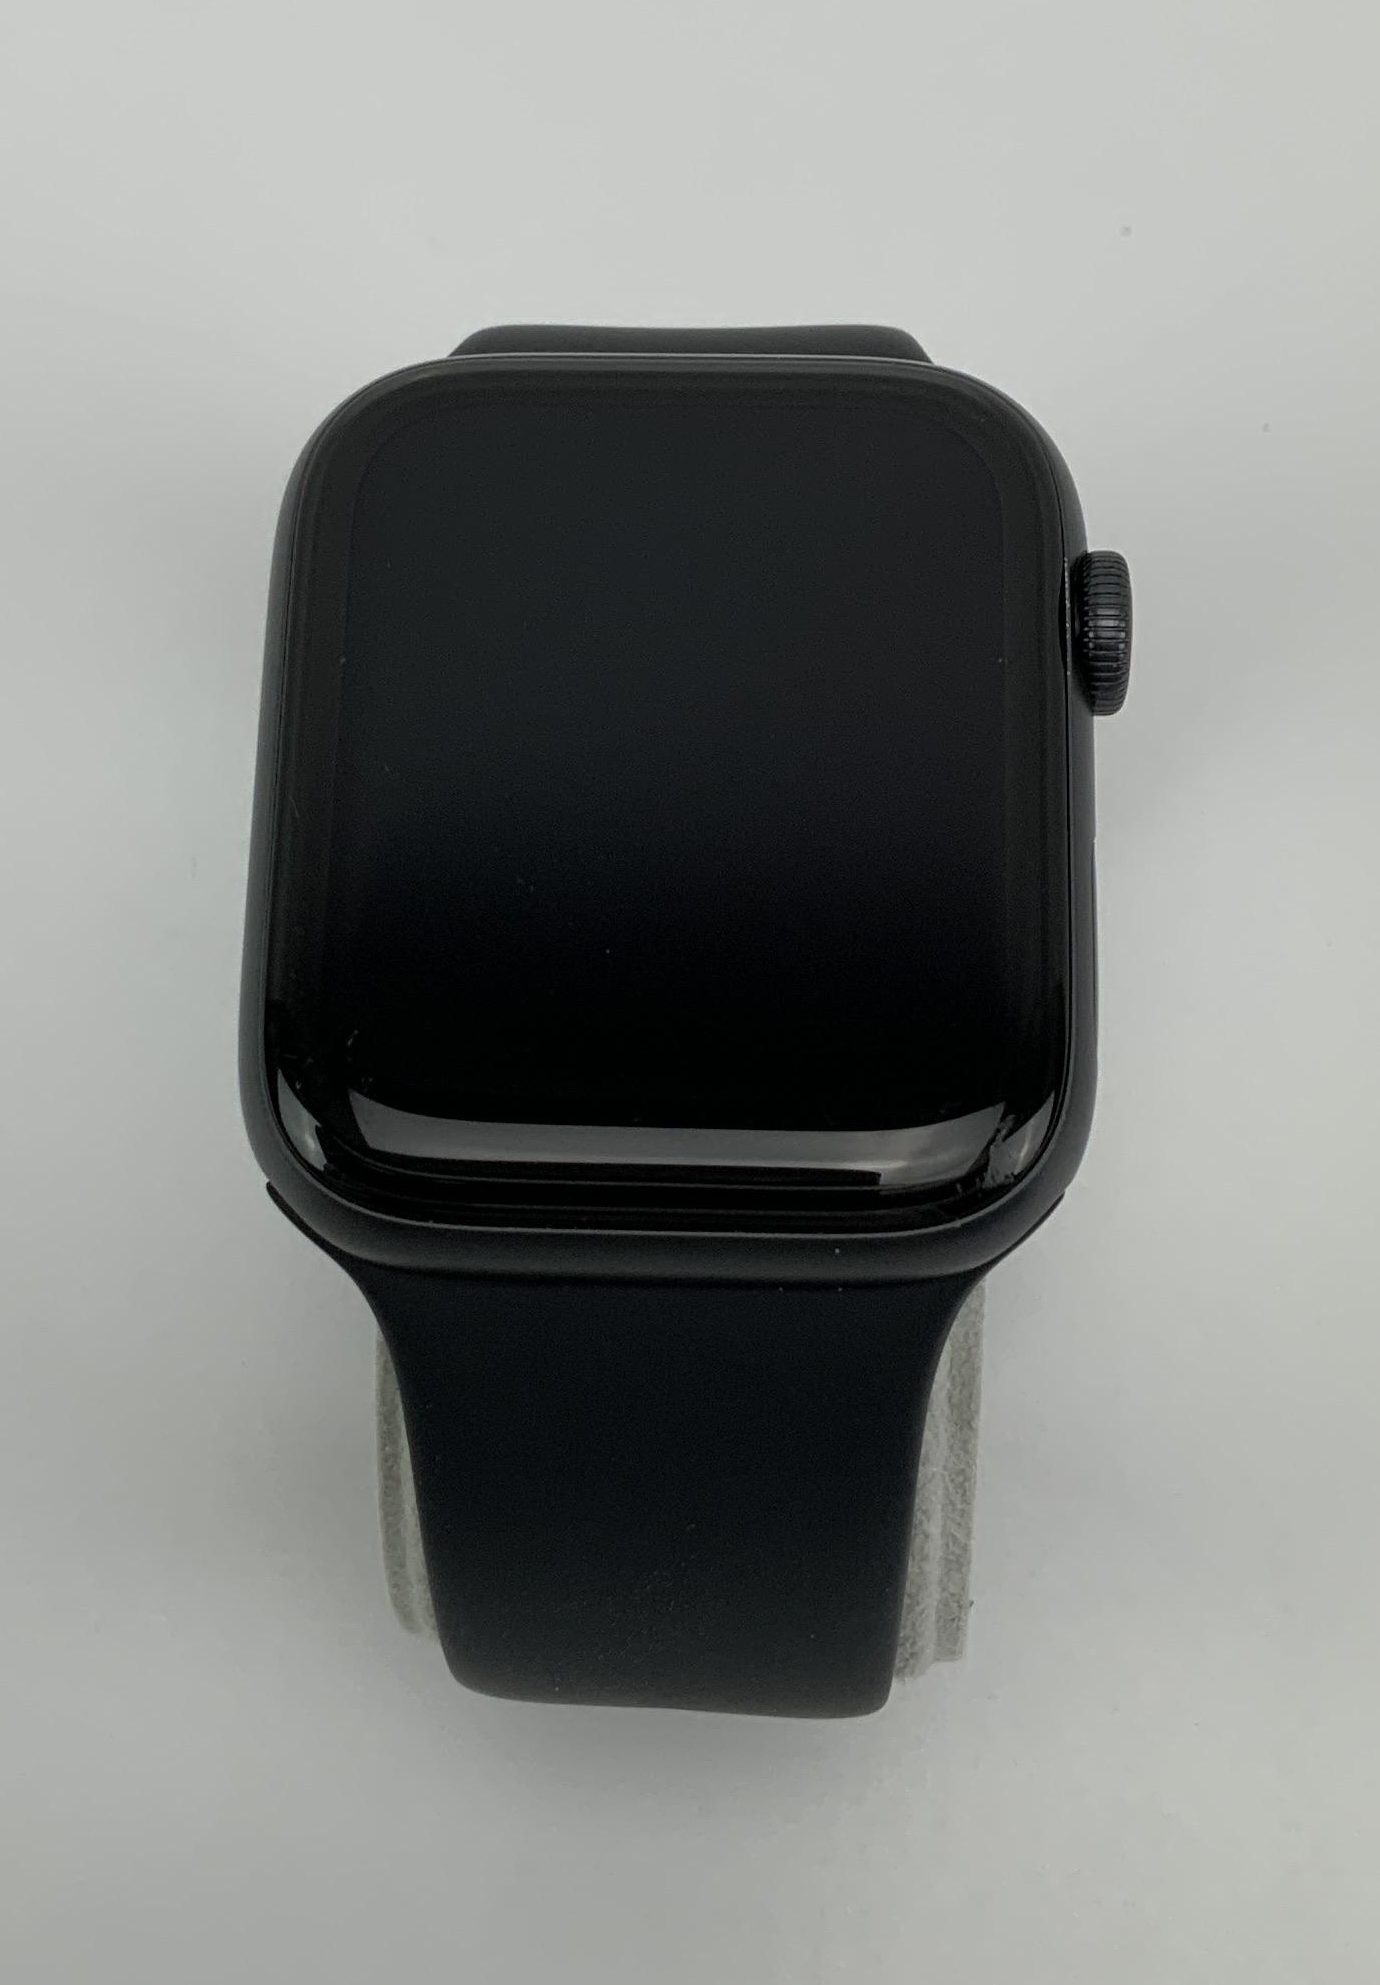 Watch Series 6 Steel Cellular (44mm), Space Black, image 1